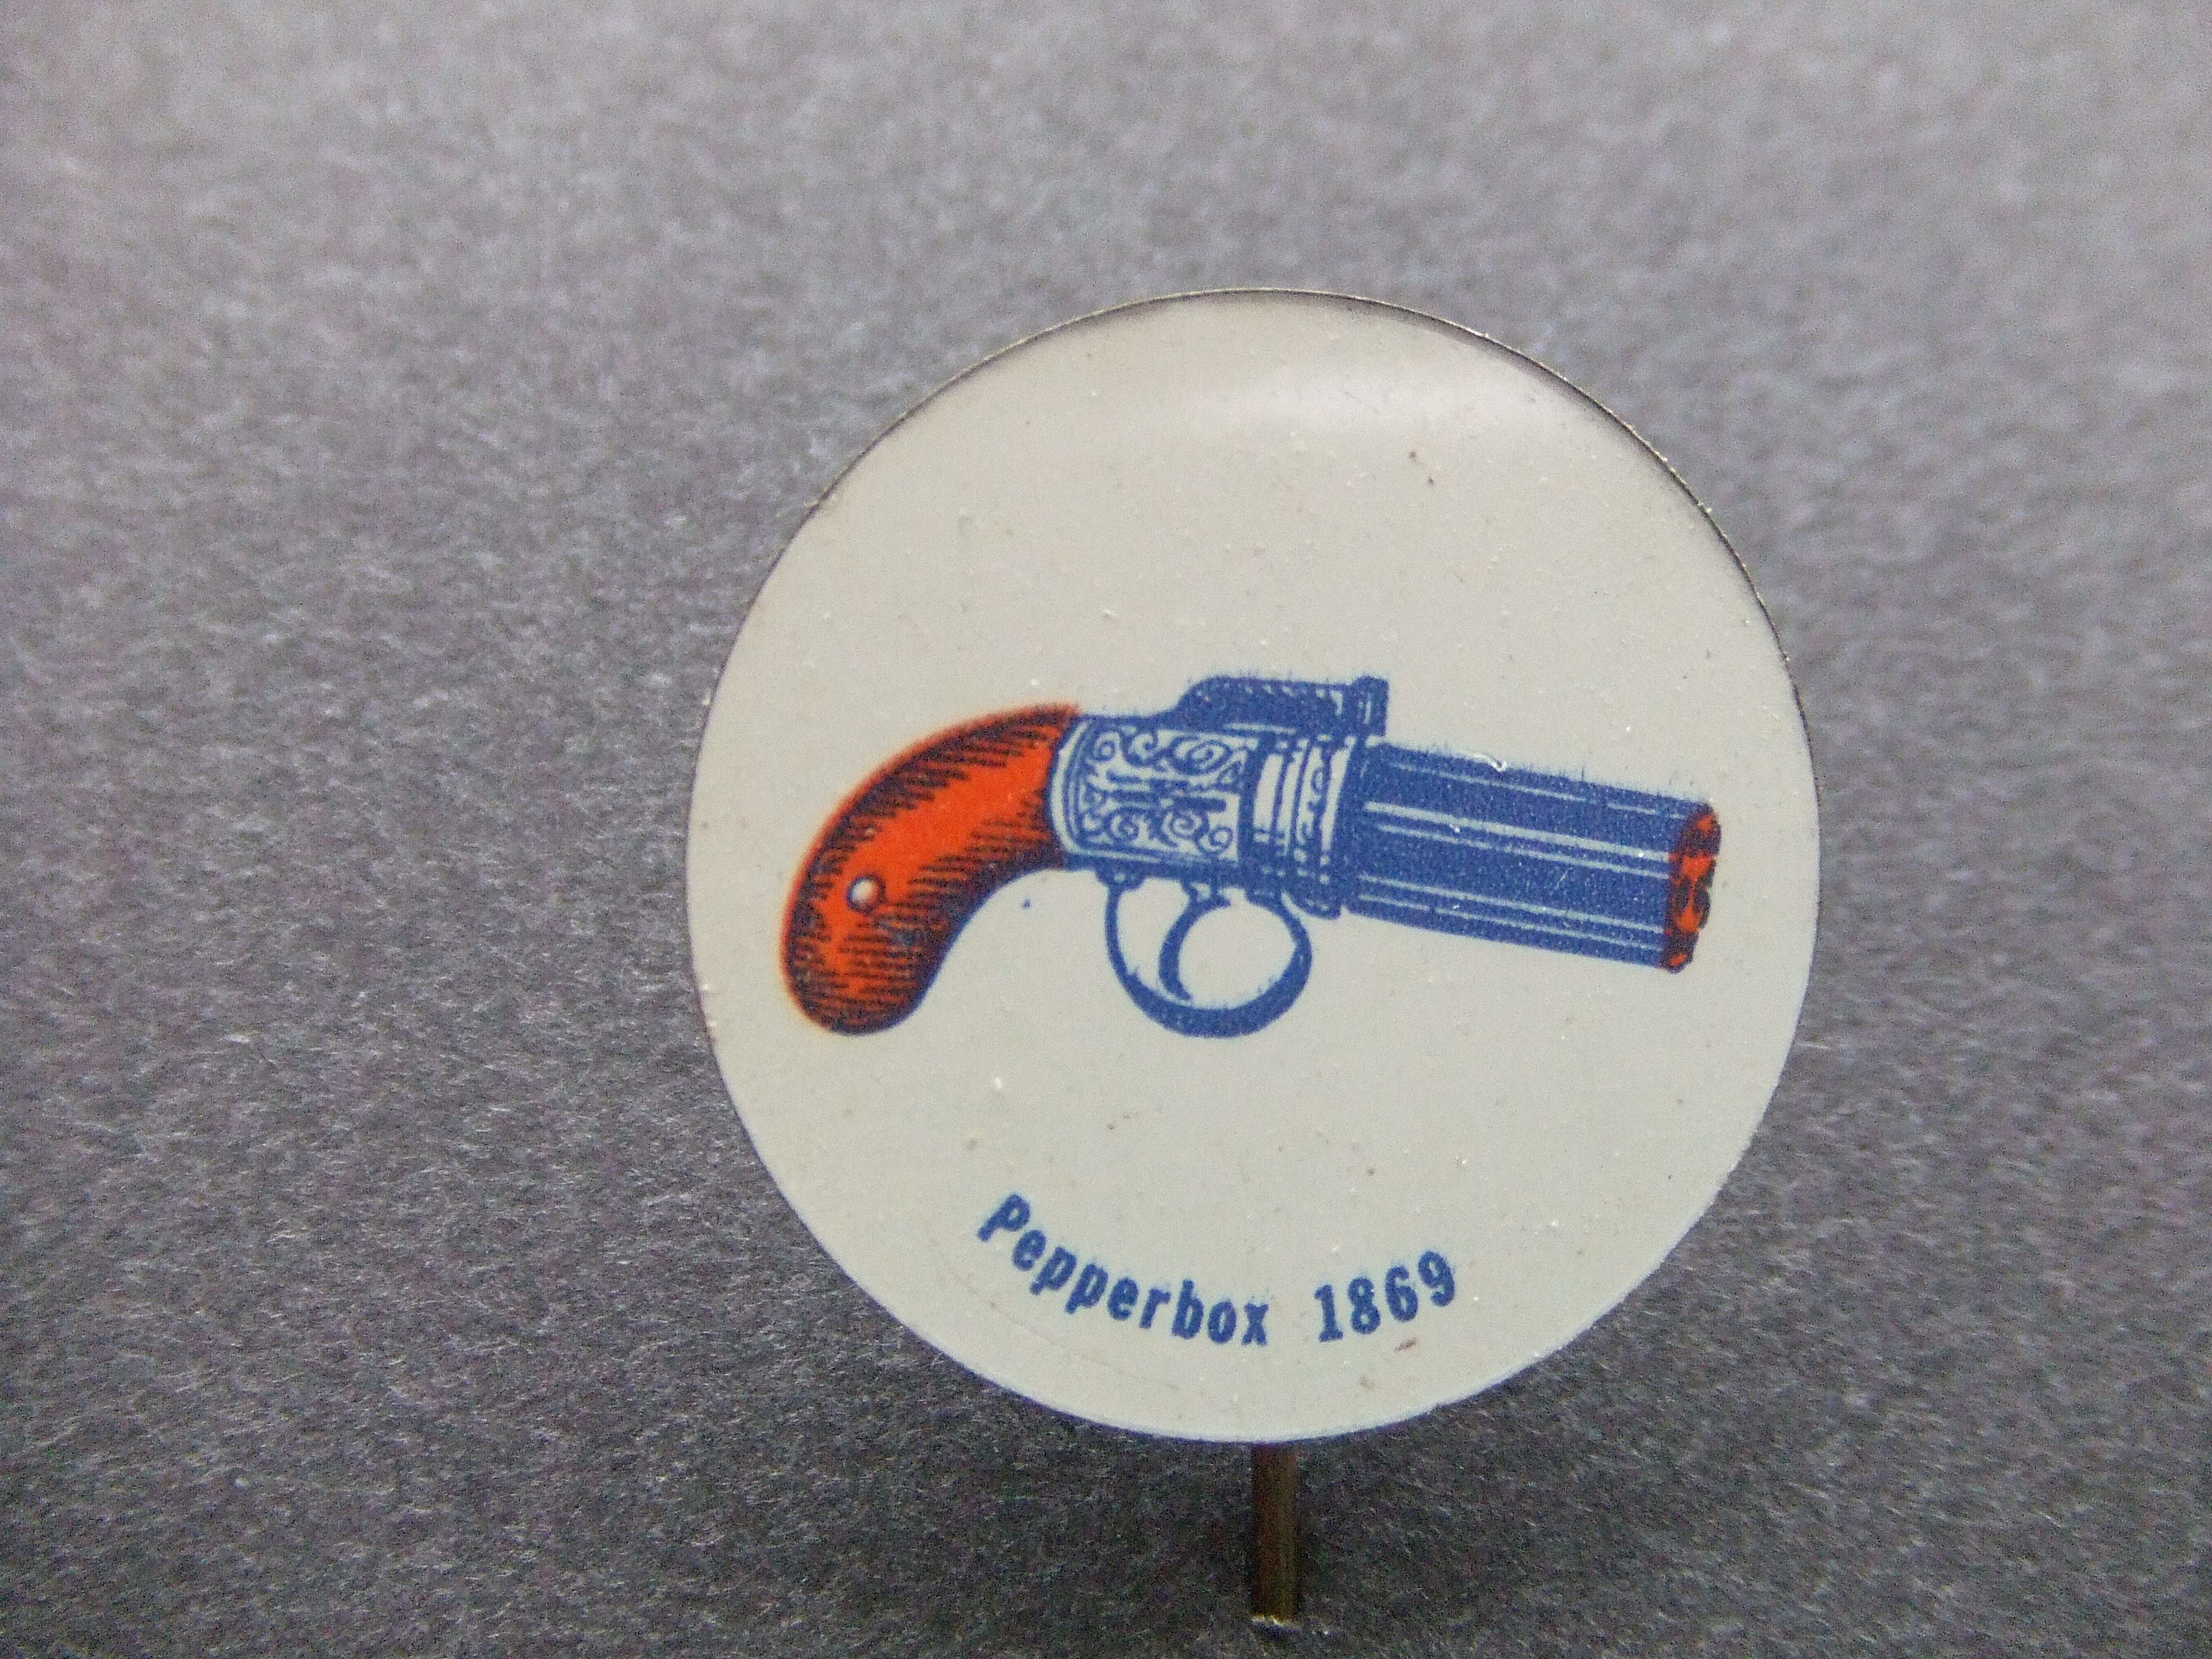 Pepper-box 1869 revolver,vuurwapen , speldje